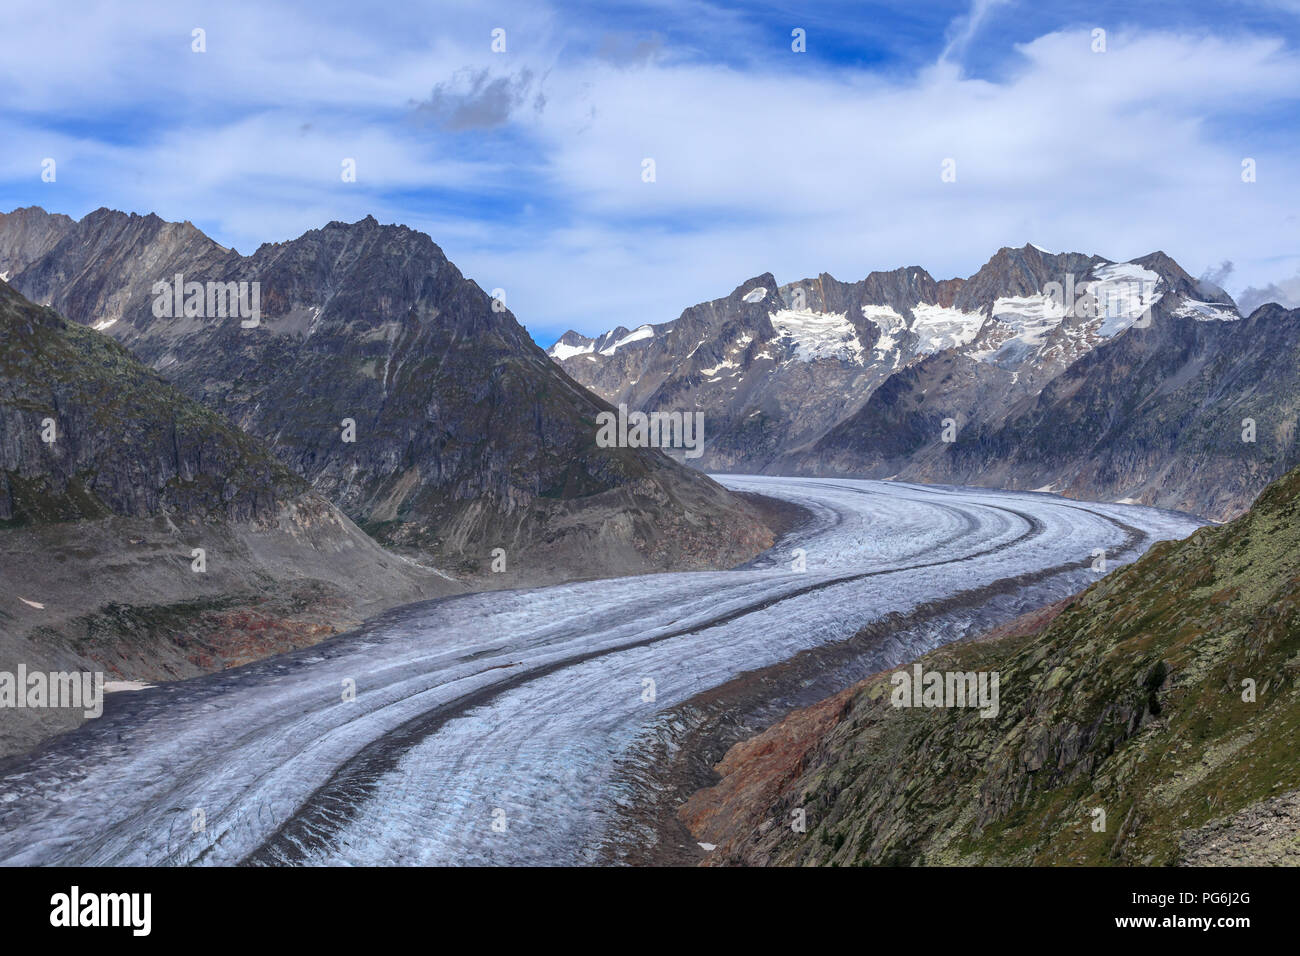 View od the Aletsch glacier in Switzerland Stock Photo